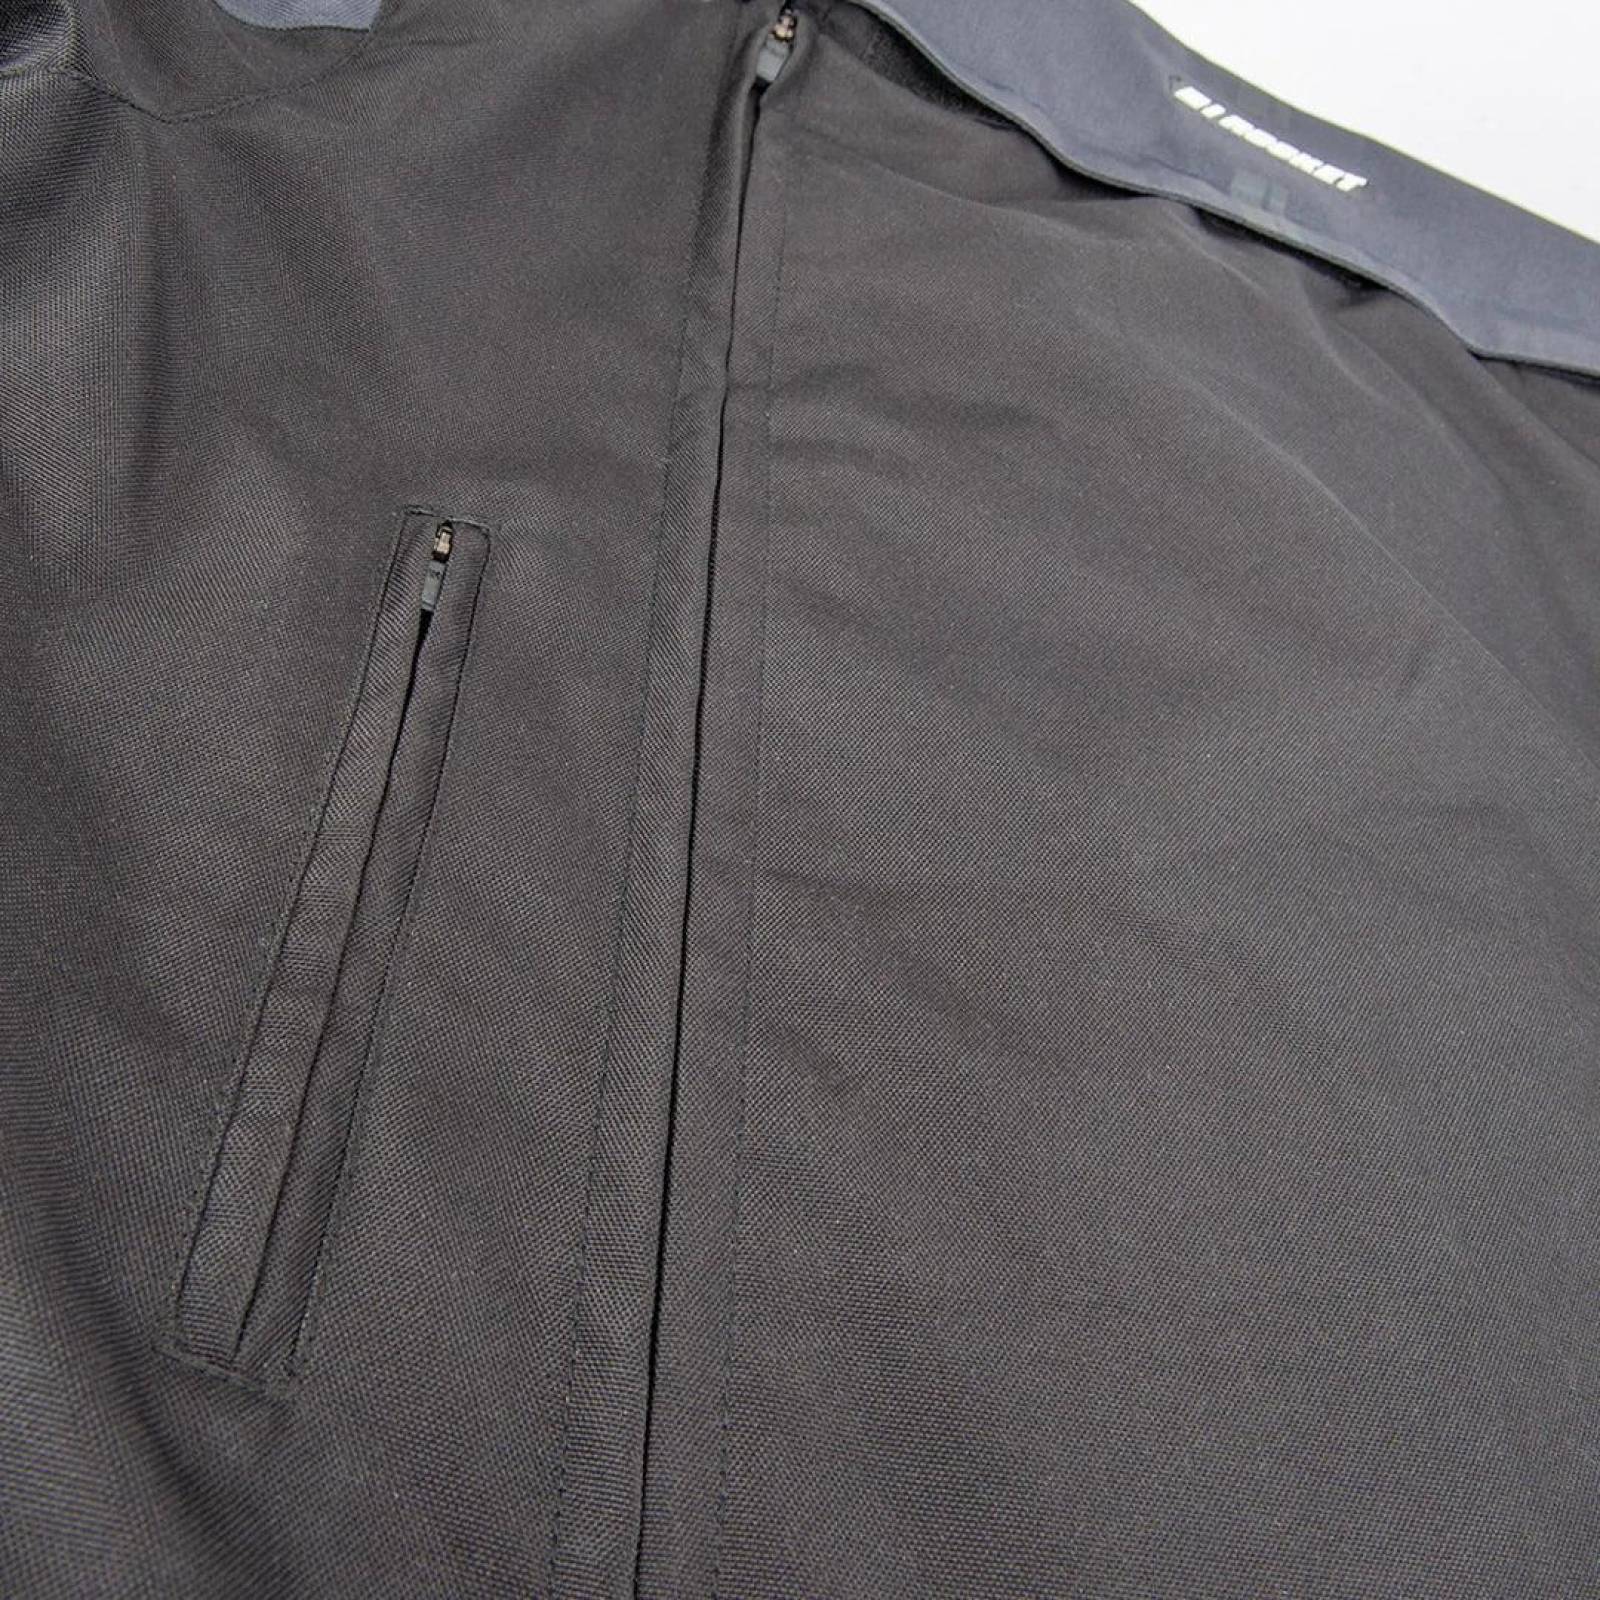 Trans Canada™ 3.0 Convertible Textile Jacket by Joe Rocket